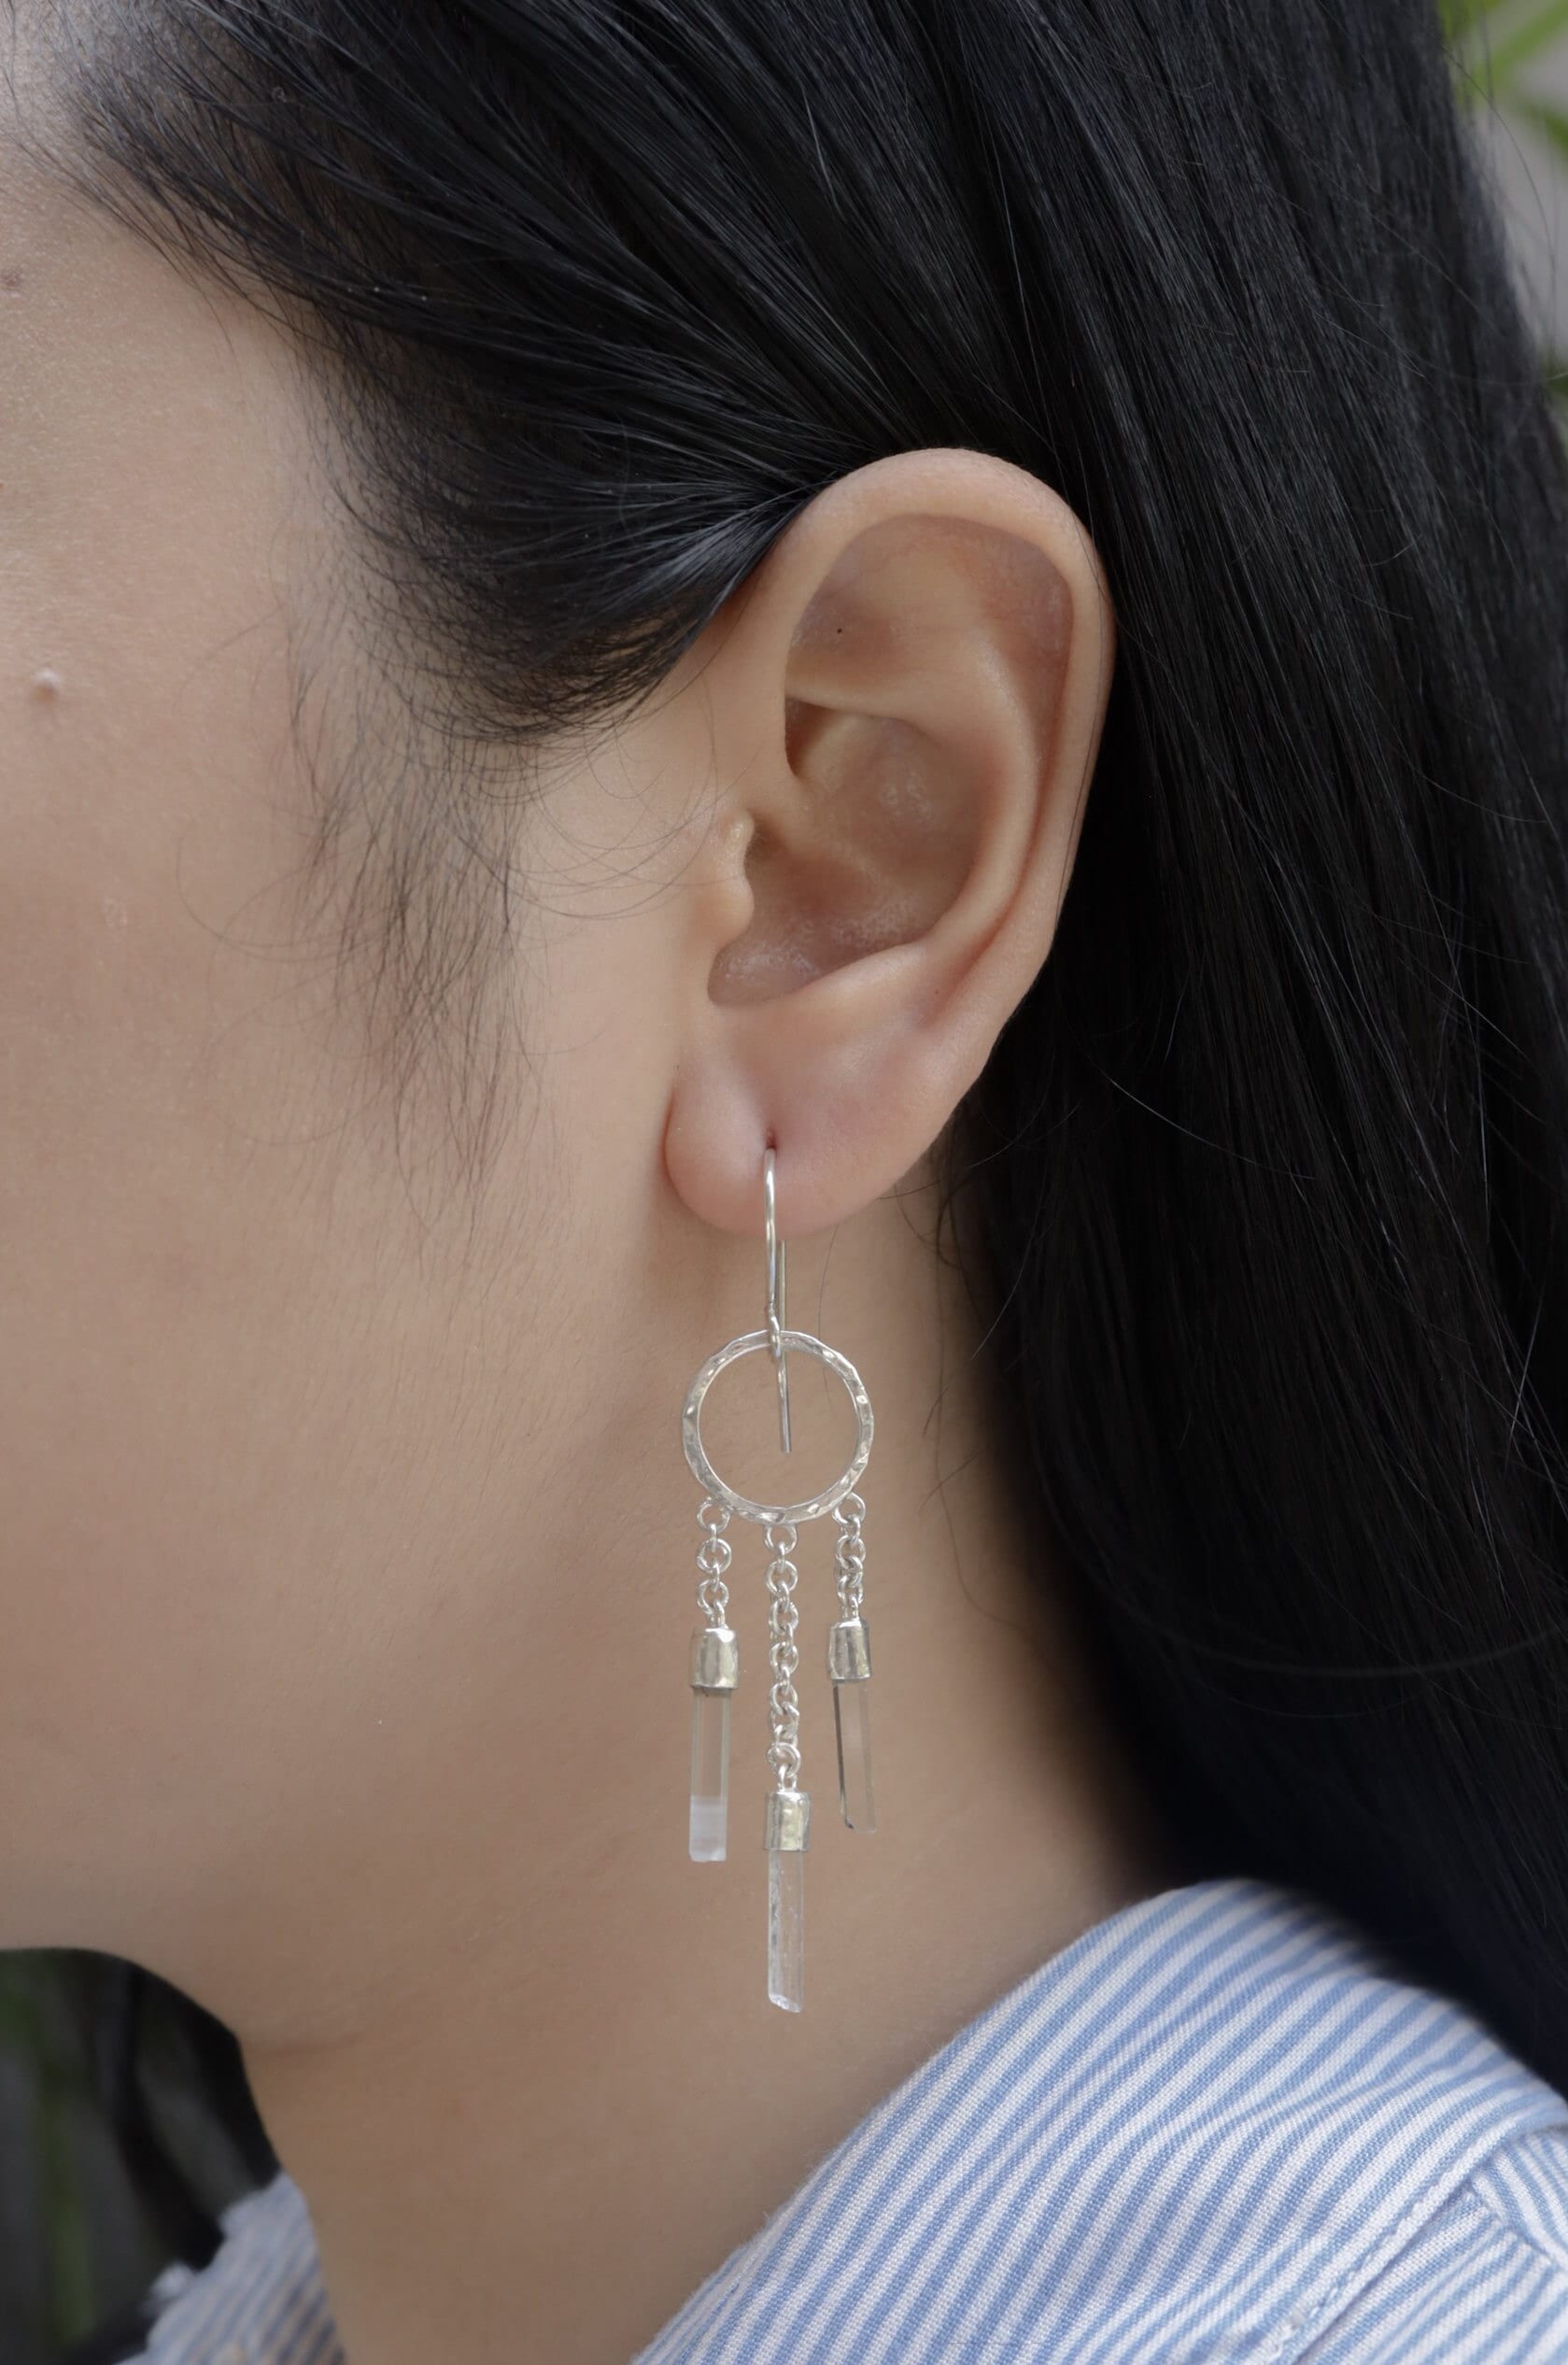 Hammered Hoop Earrings in 925 Sterling Silver, Featuring 3 Chain-Linked Celestial Lemurian Quartz Points, Stylish Hook Earrings